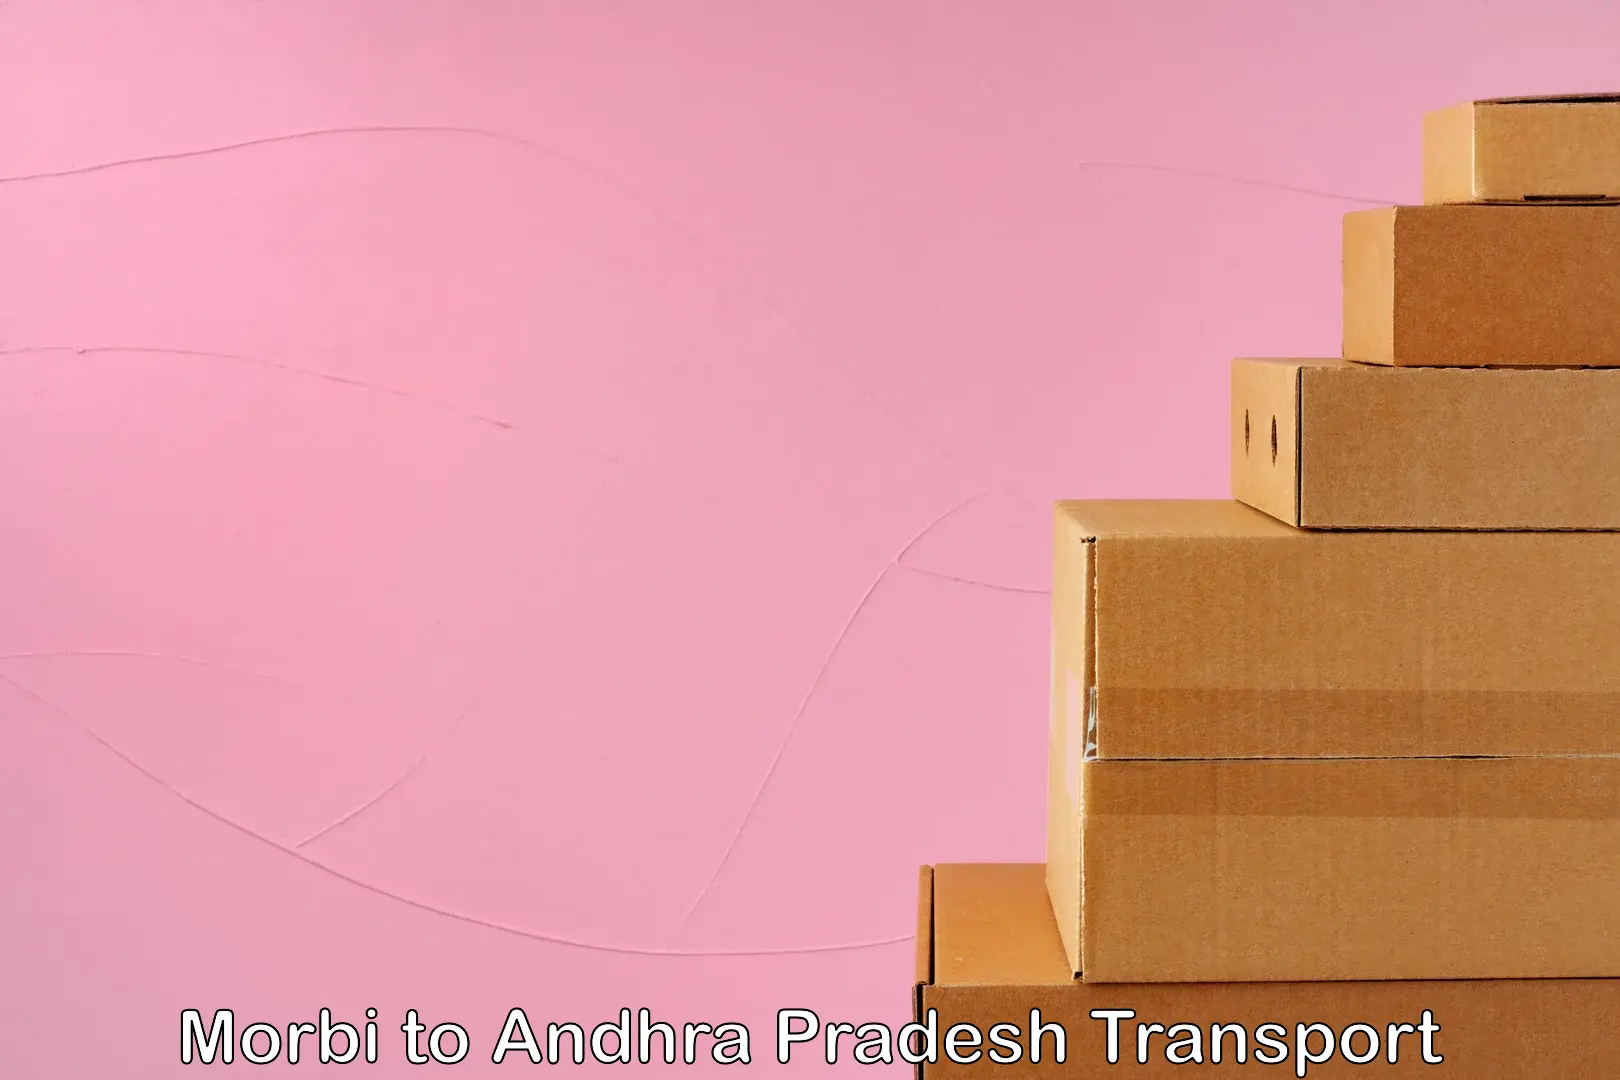 Truck transport companies in India Morbi to Andhra Pradesh